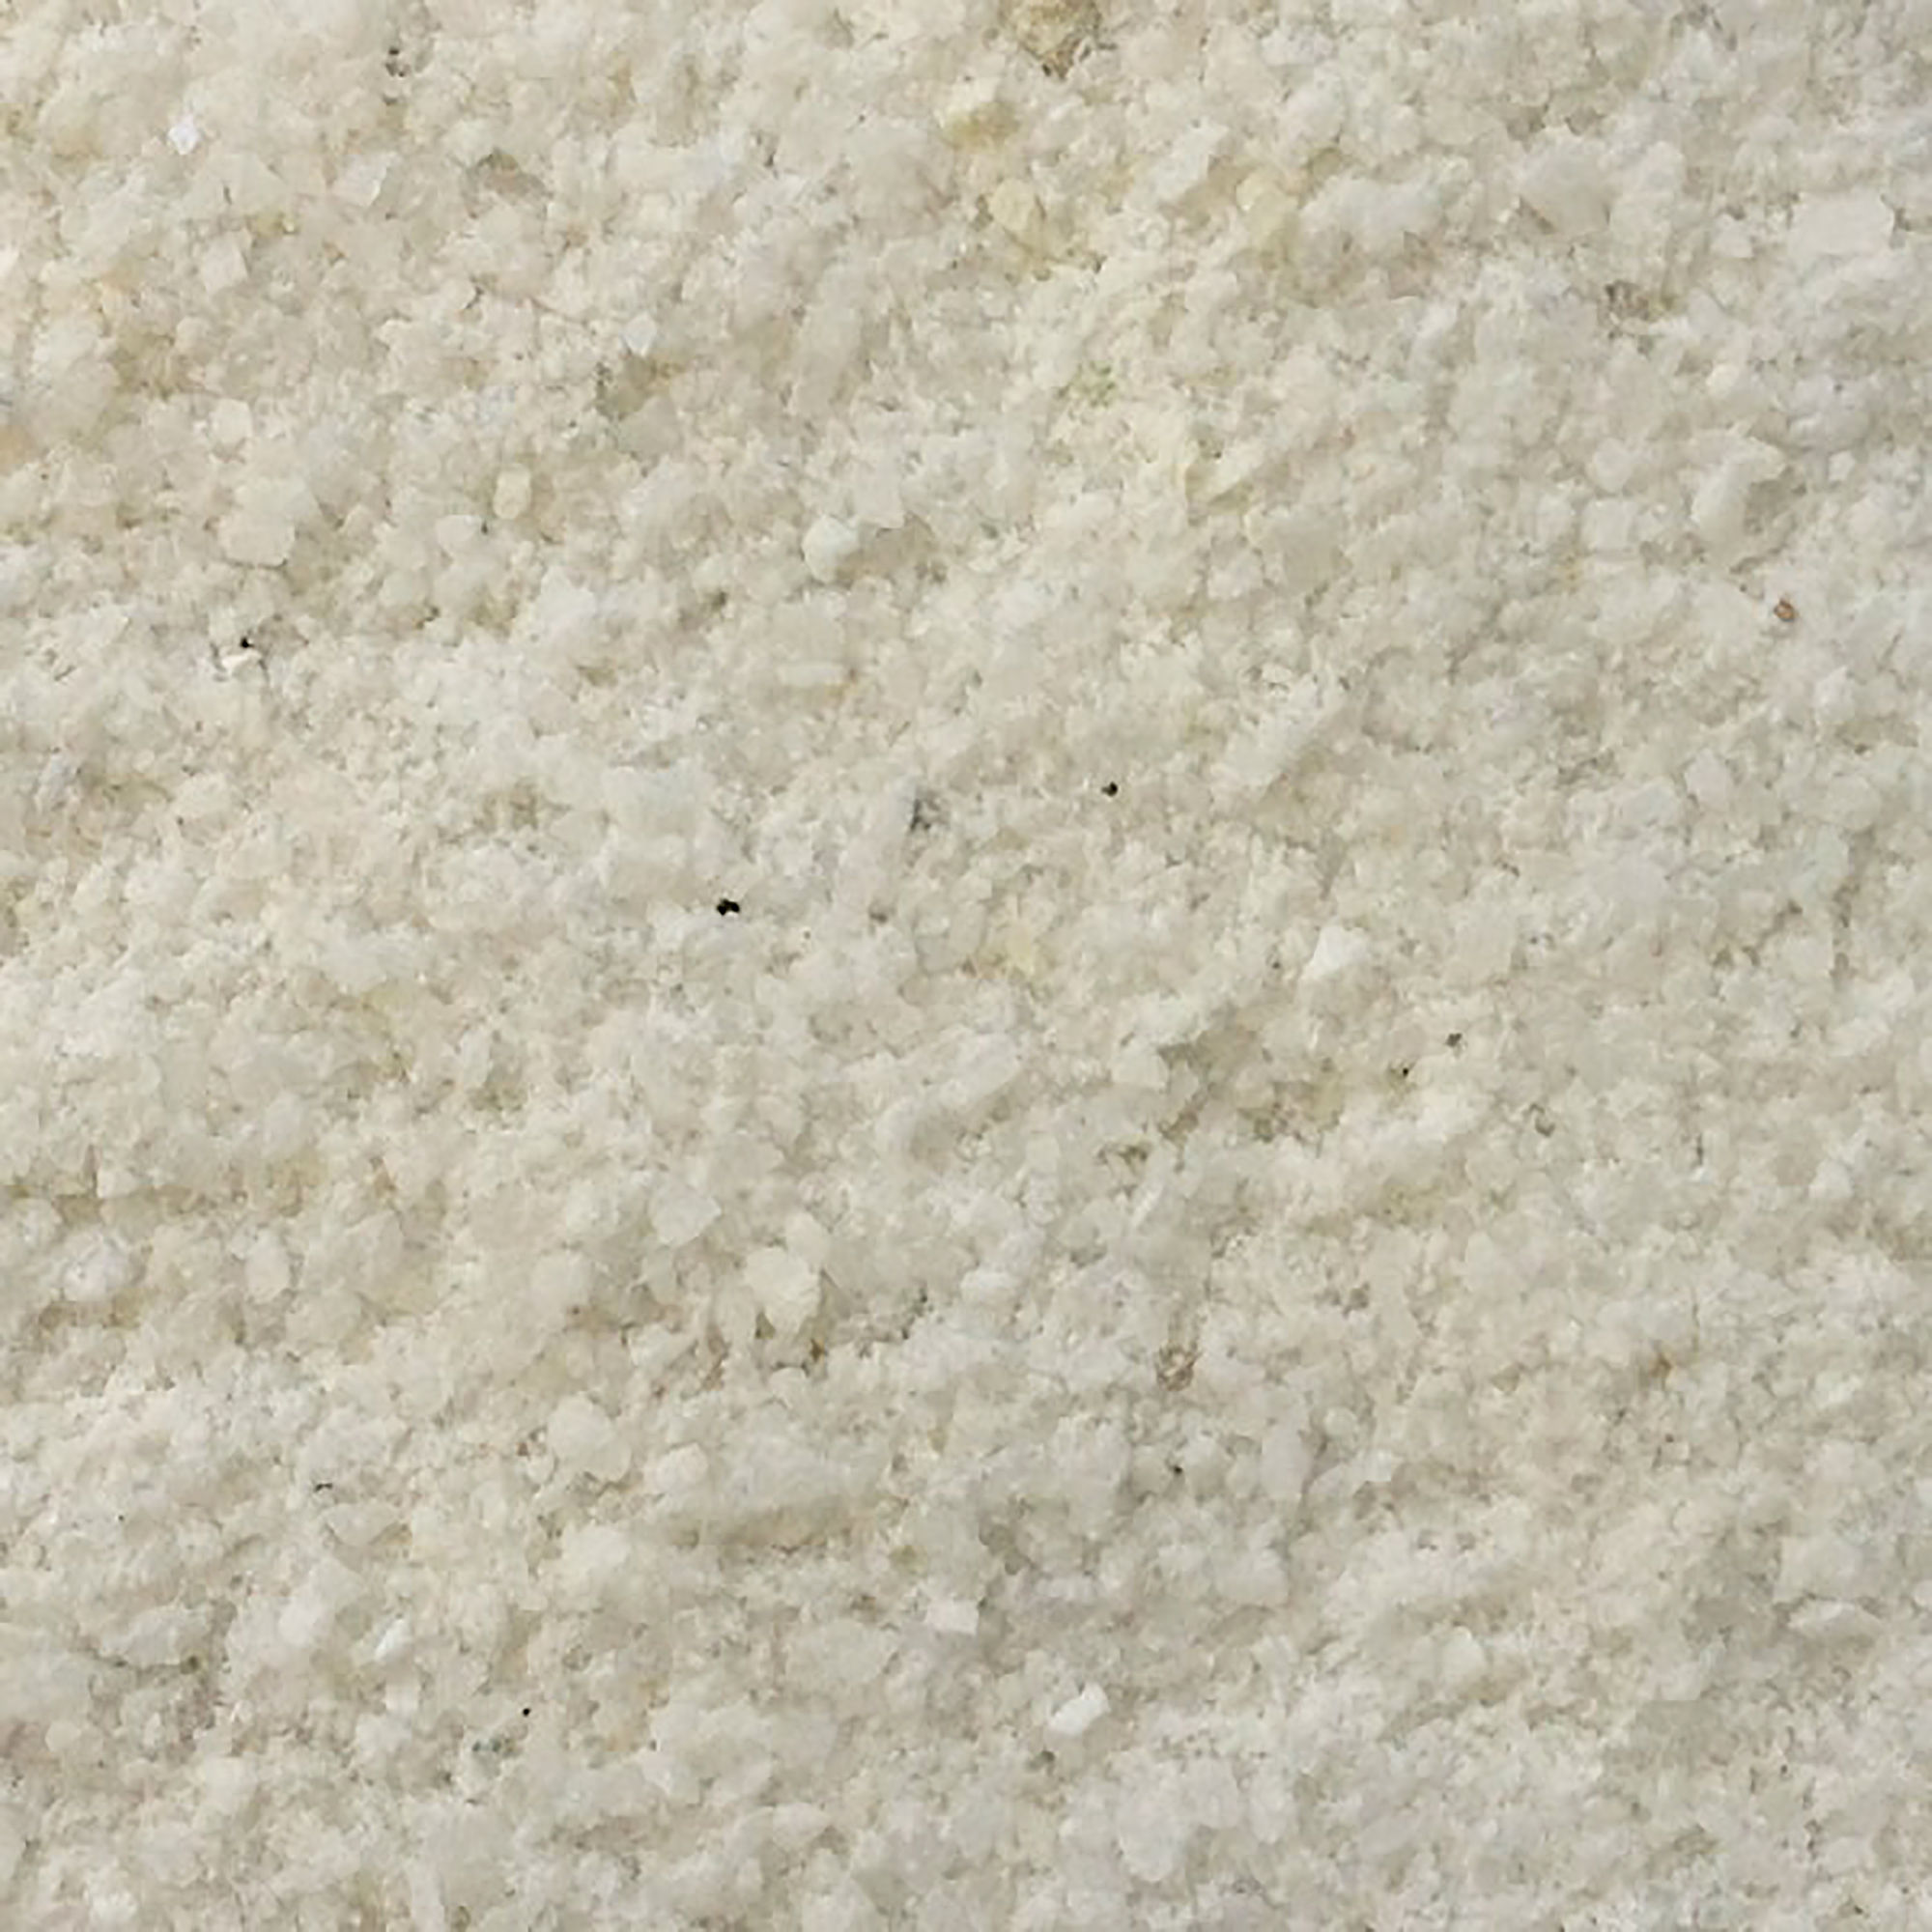 White Rock Salt 20kg Bag